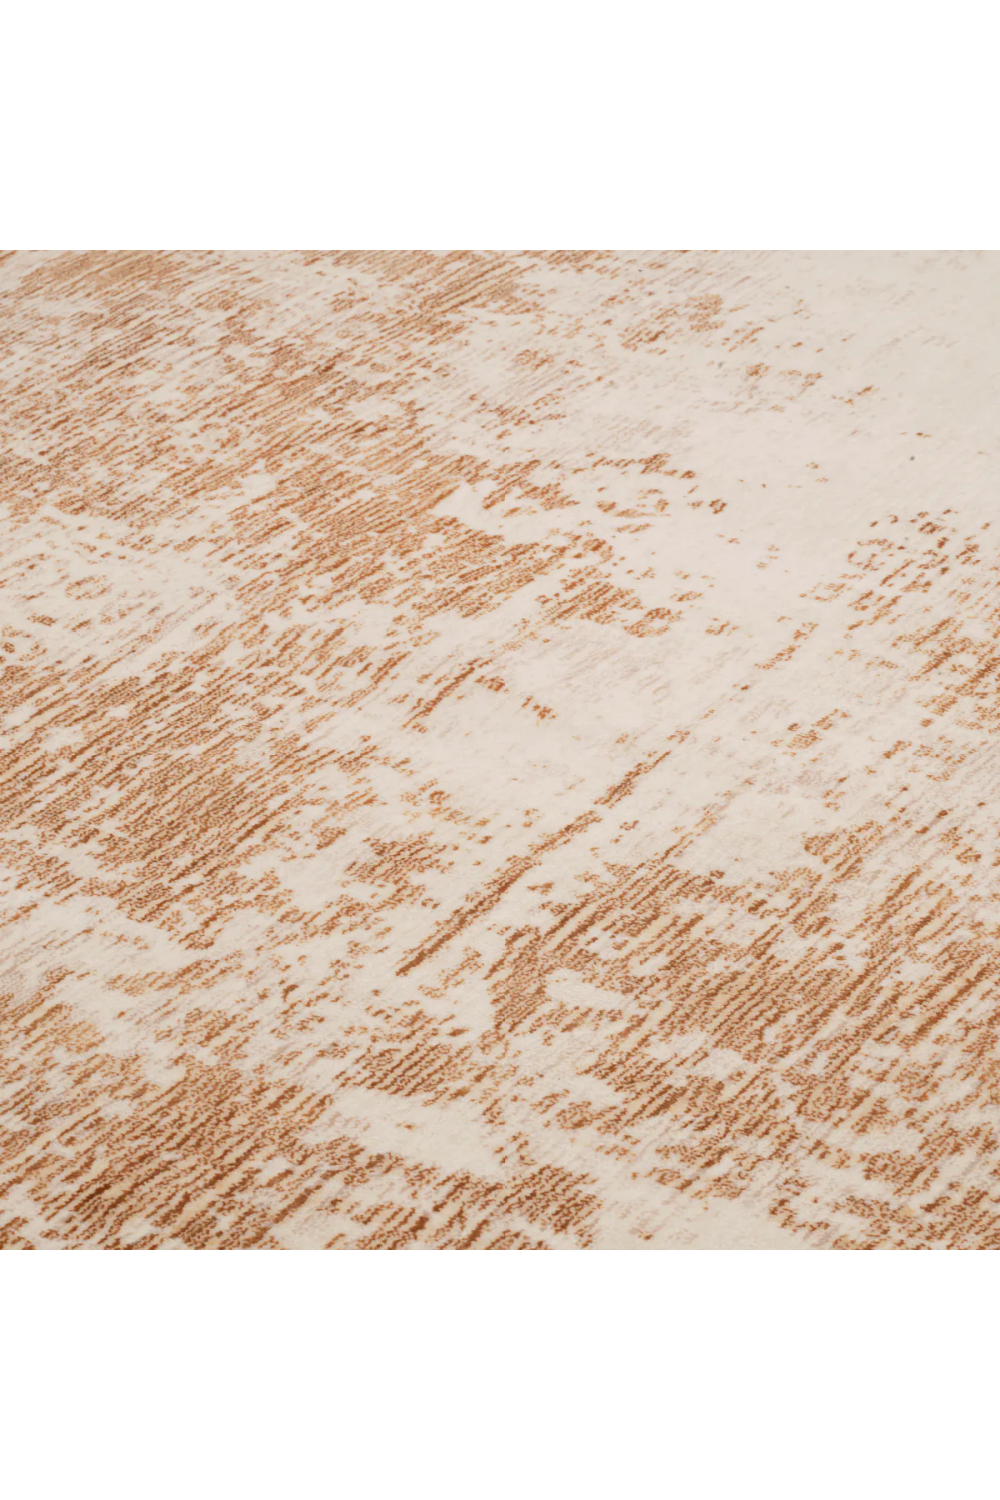 Beige Loom-Knotted Carpet | Eichholtz Noli | Oroa.com